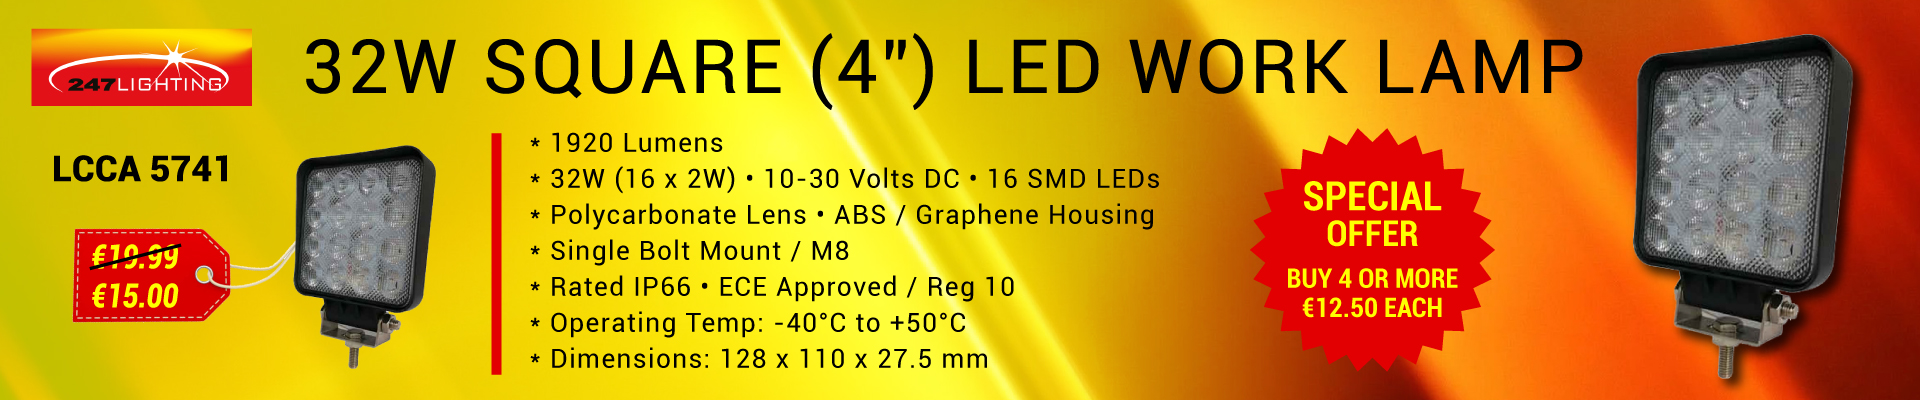 247 Lighting 32 W LED Work Lamp Special Offer